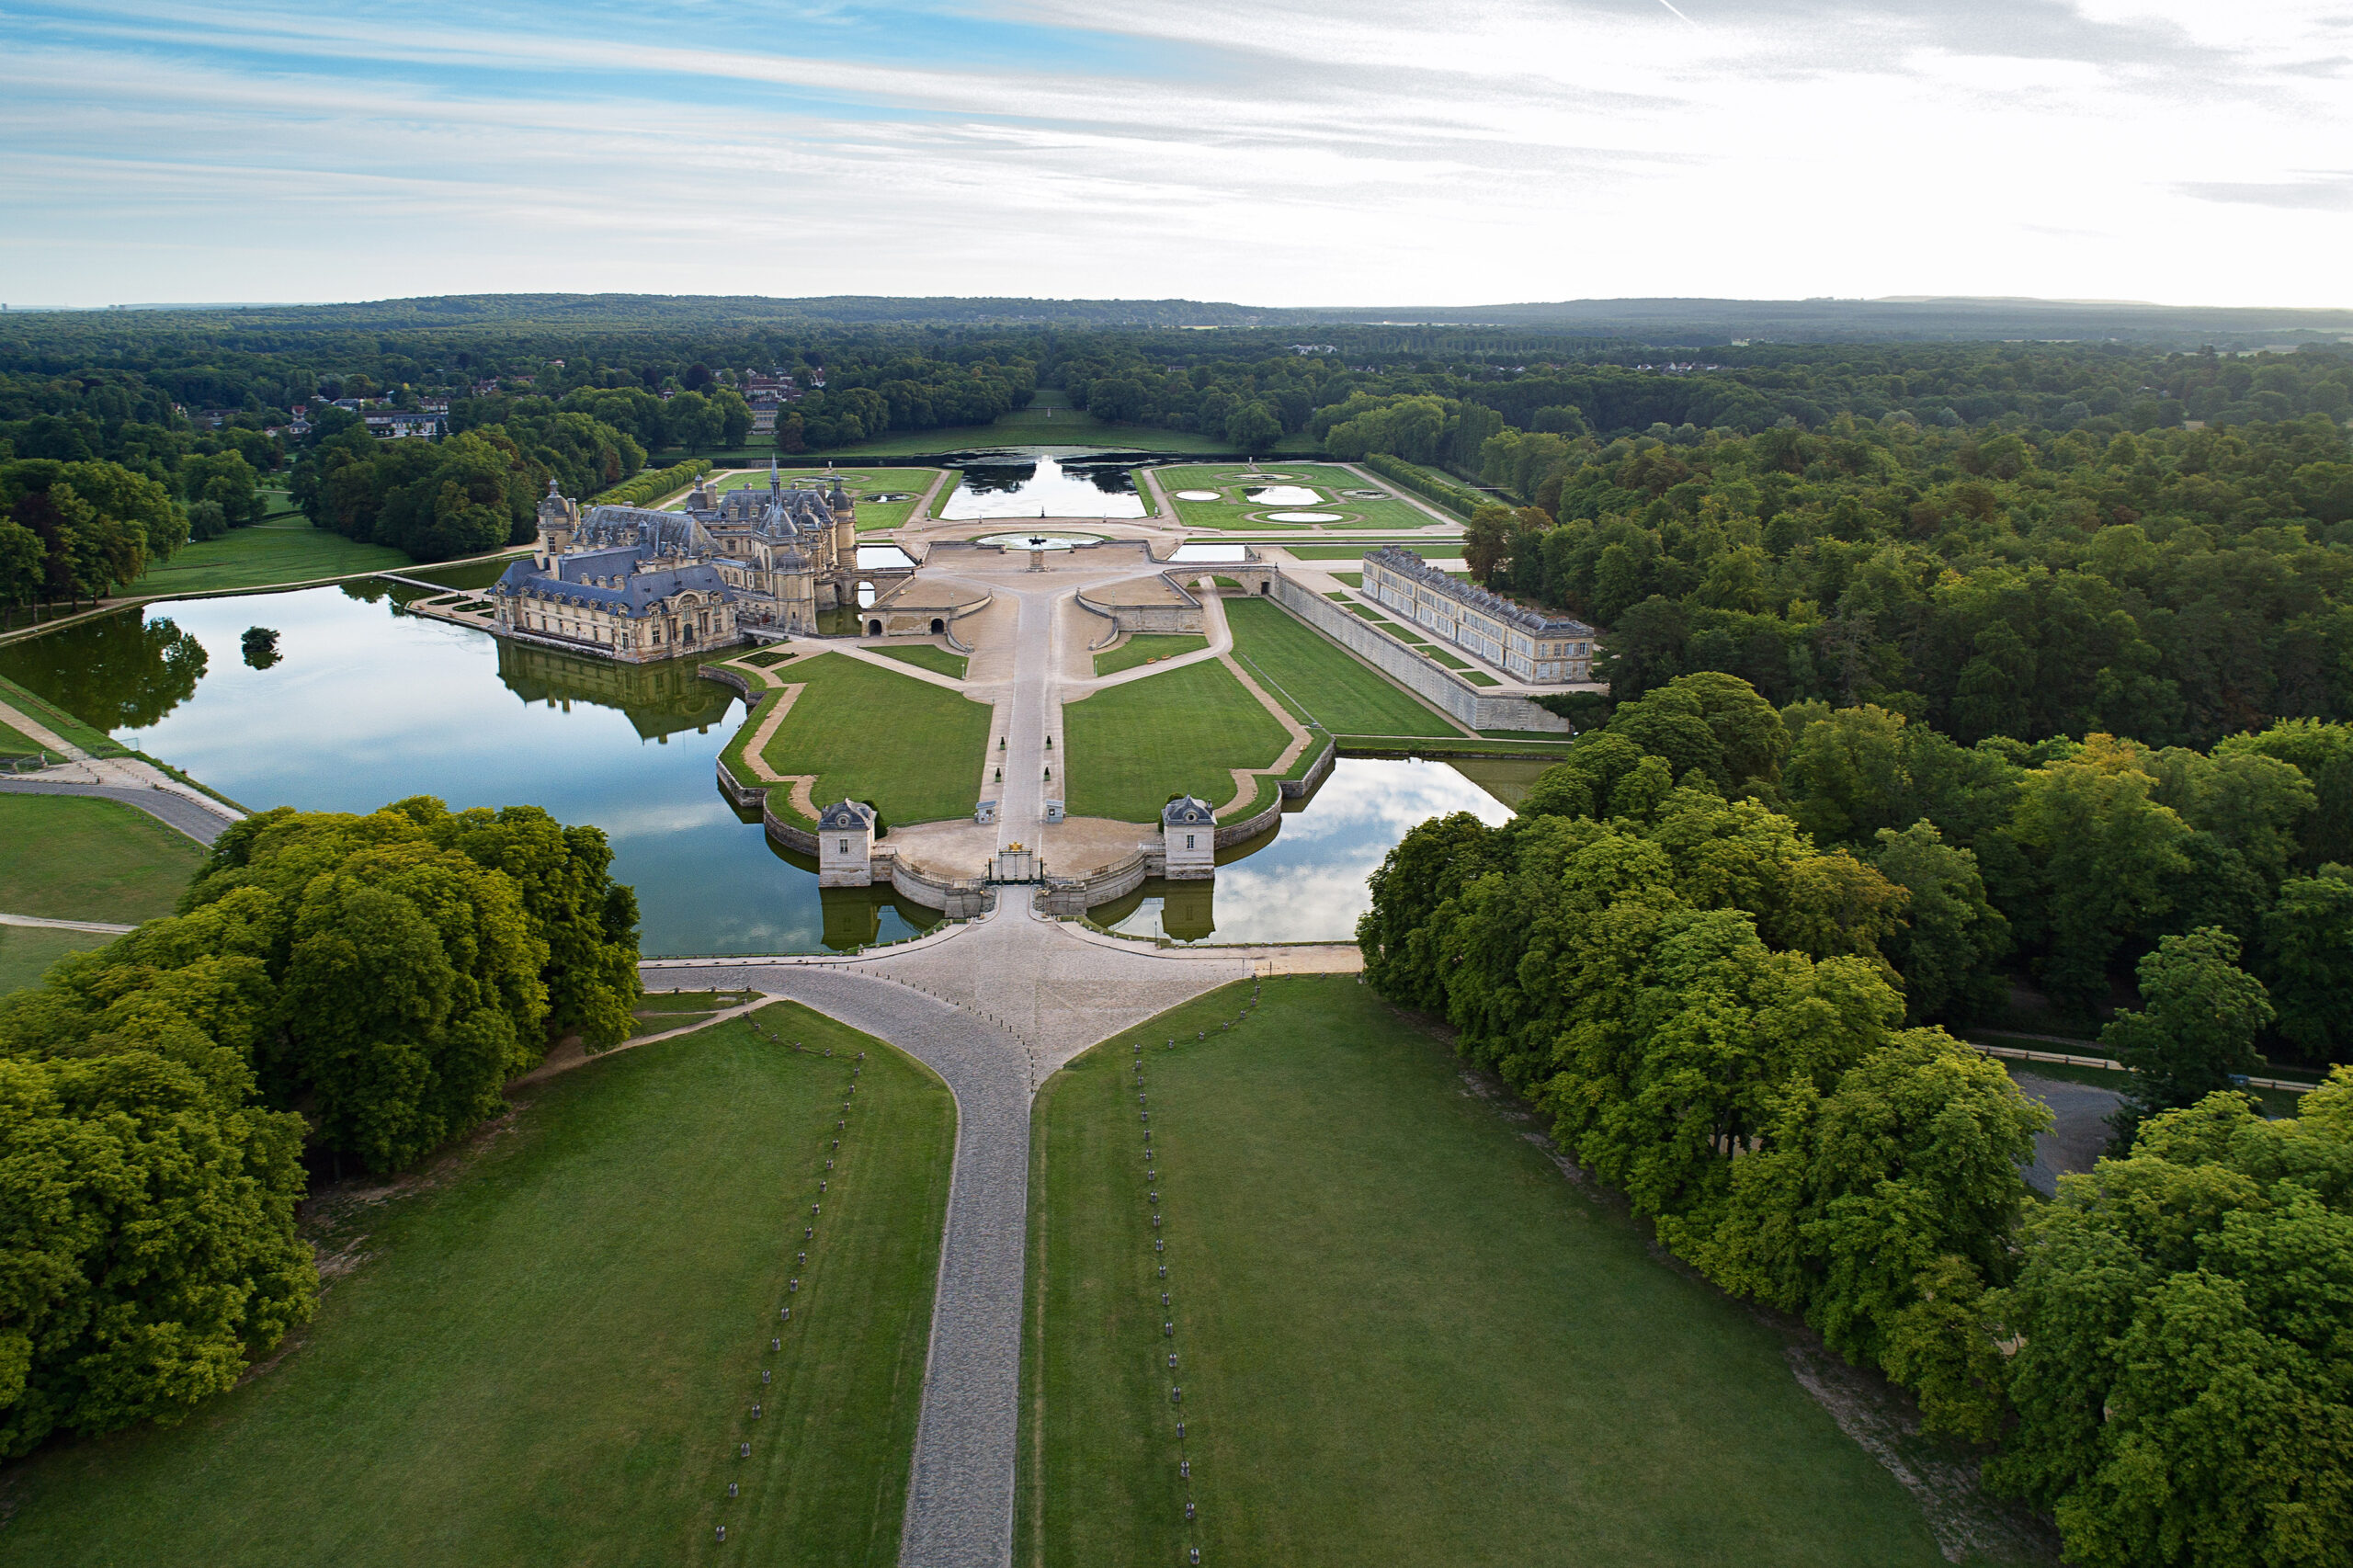 Château de Chantilly, Chantilly, France — Google Arts & Culture